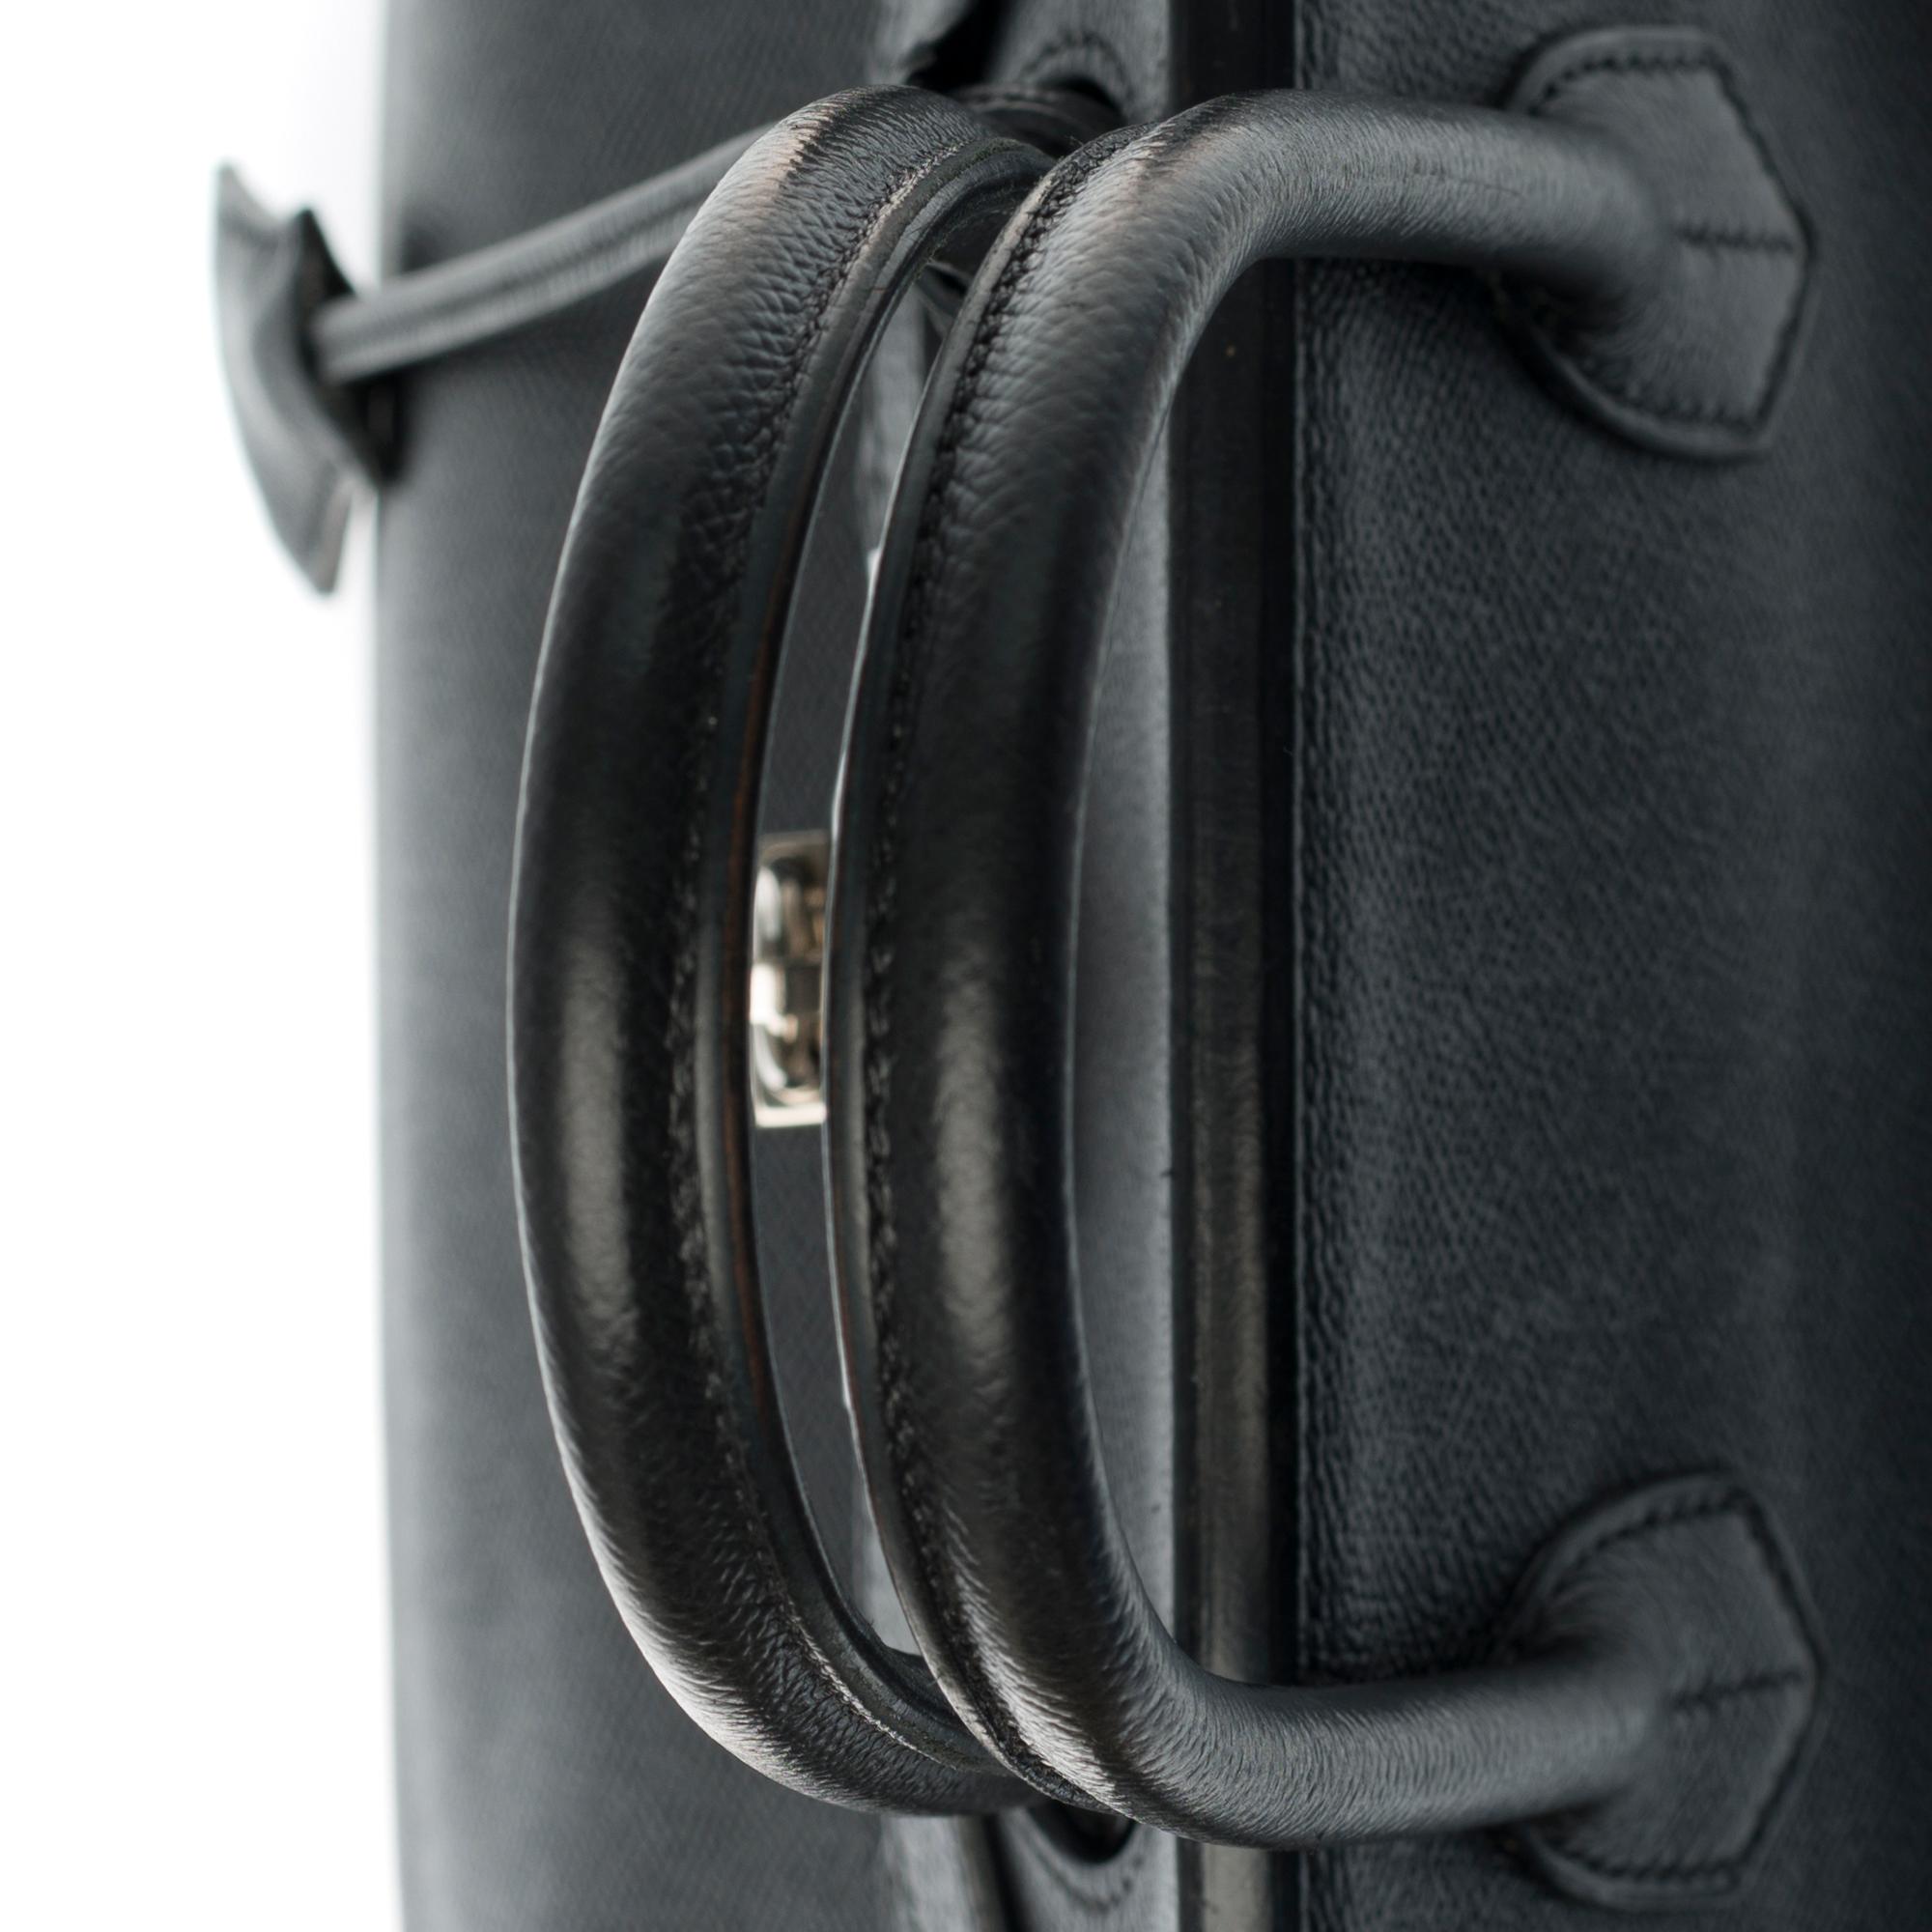 Hermès Birkin 30 handbag in black epsom leather and silver Palladium hardware 1